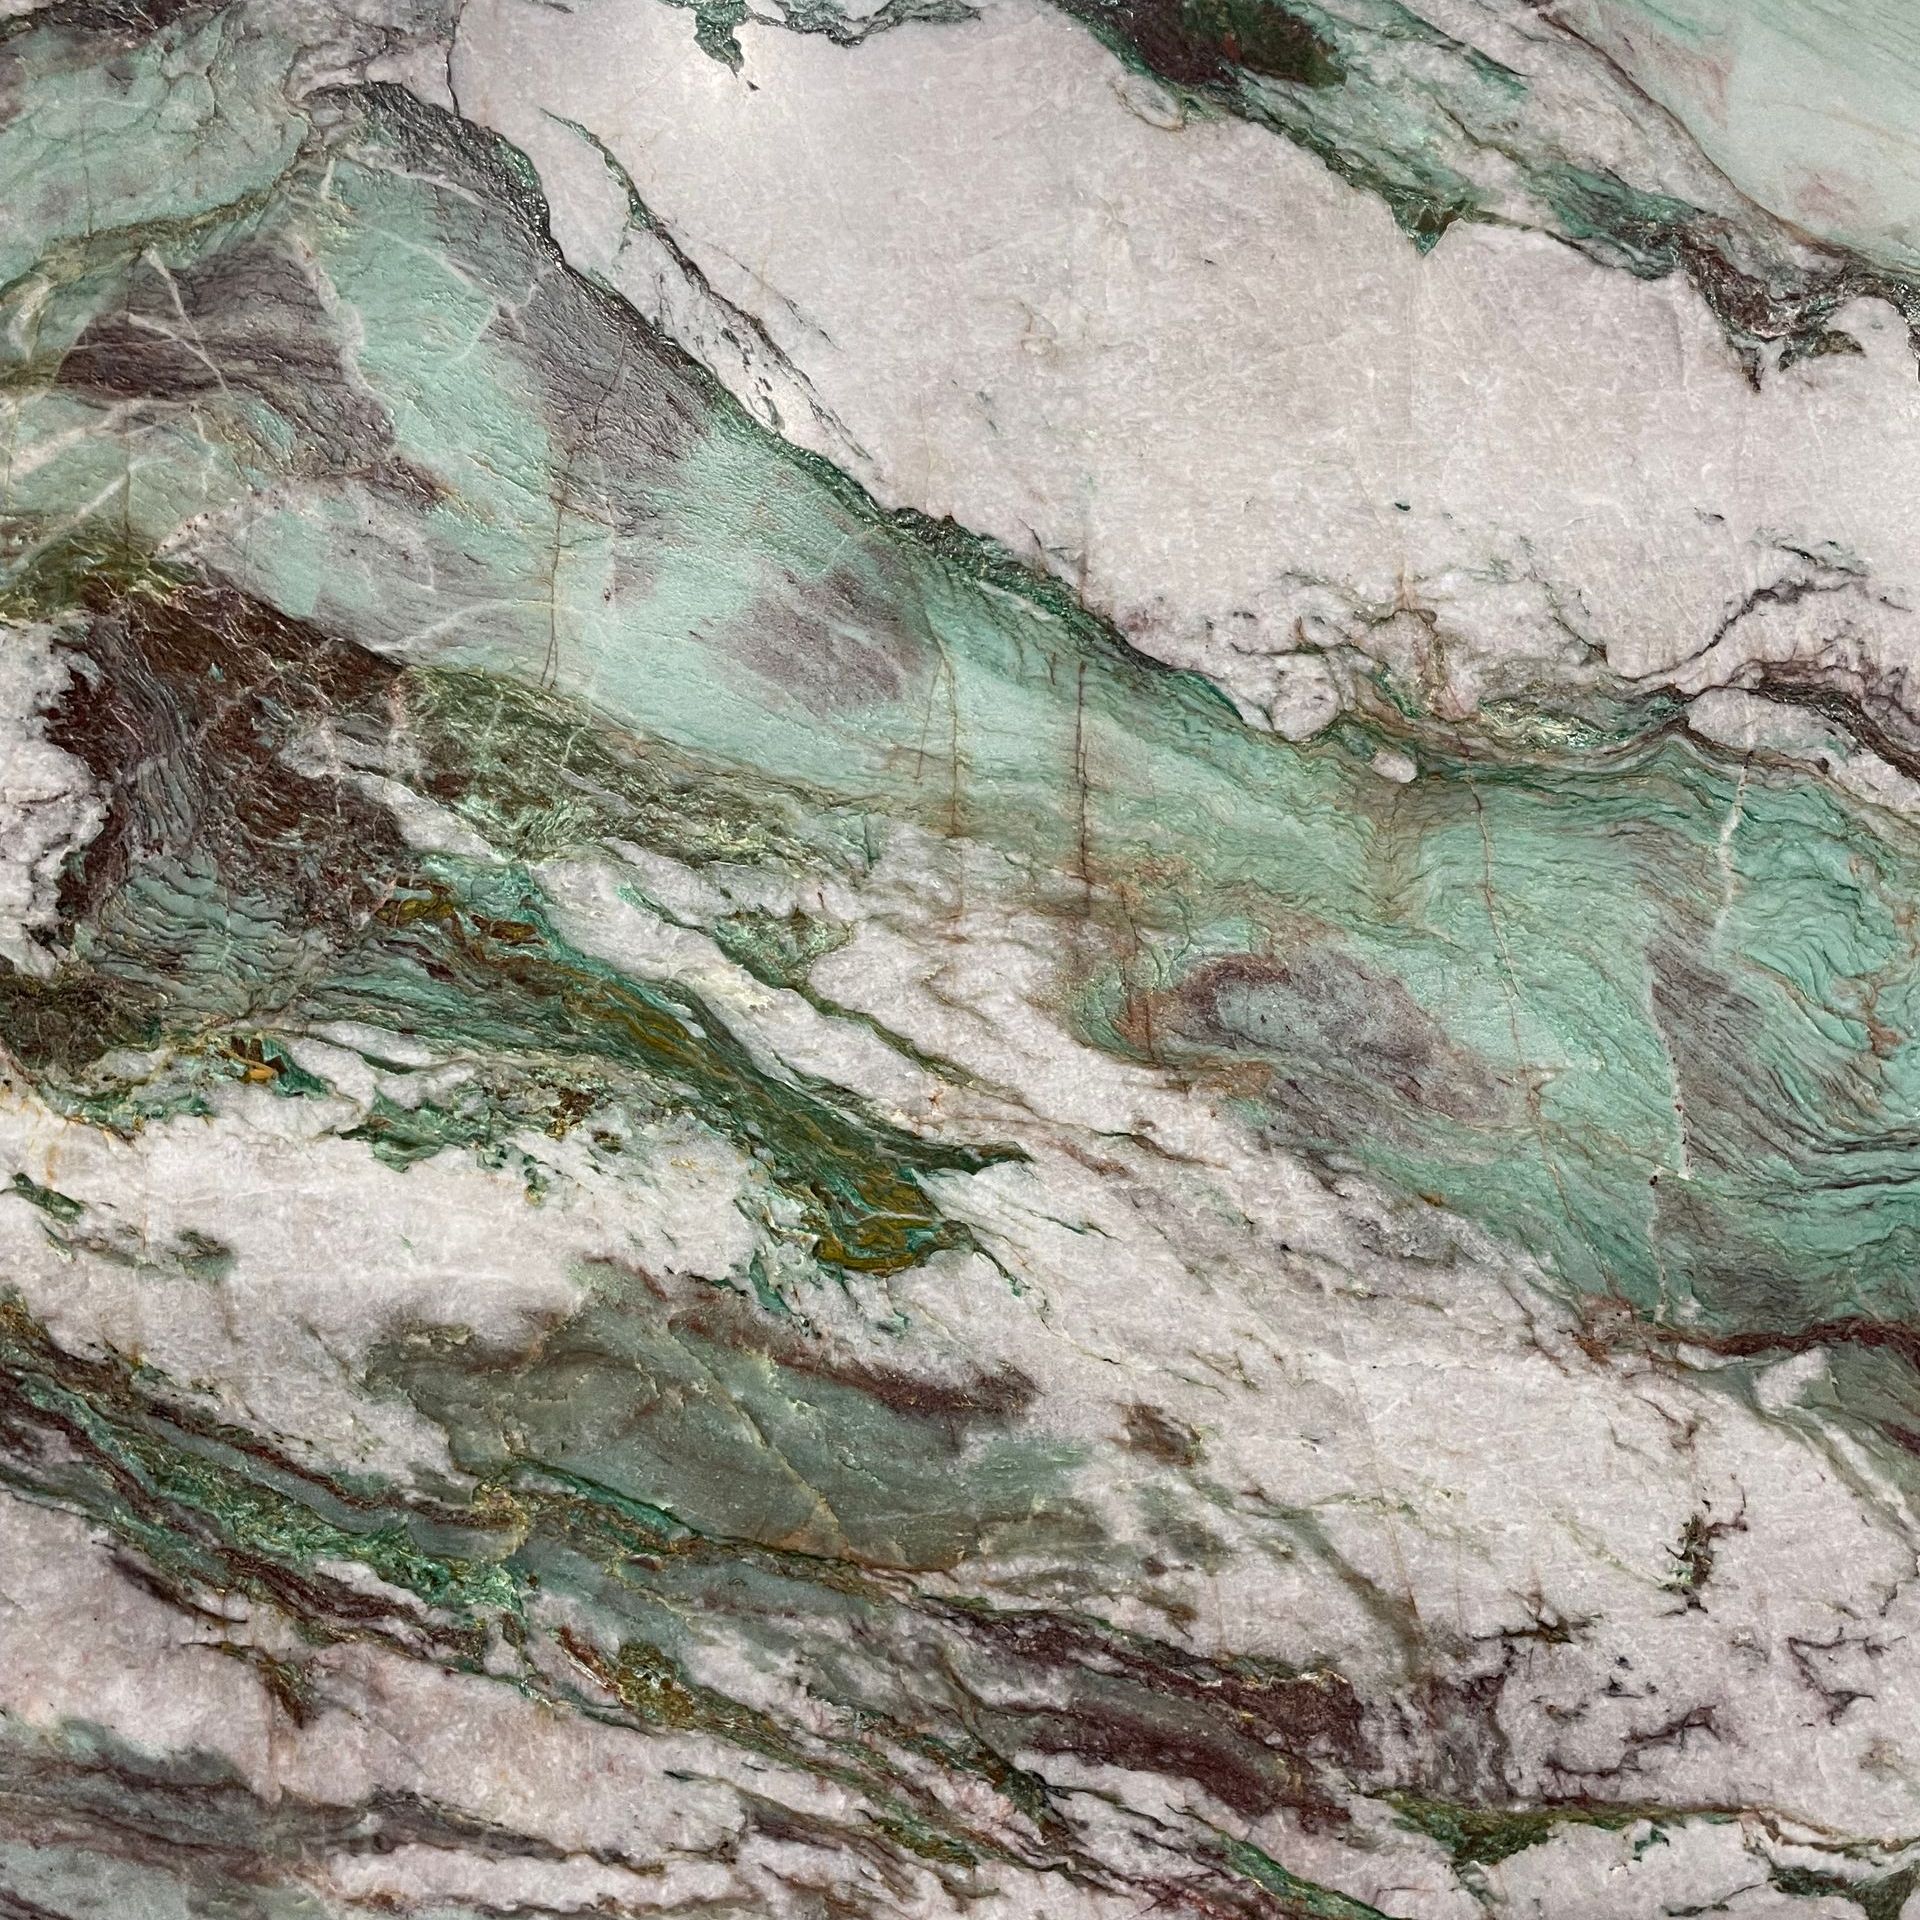 Quartzite, Engineered stone, man-made, Marble look alike.